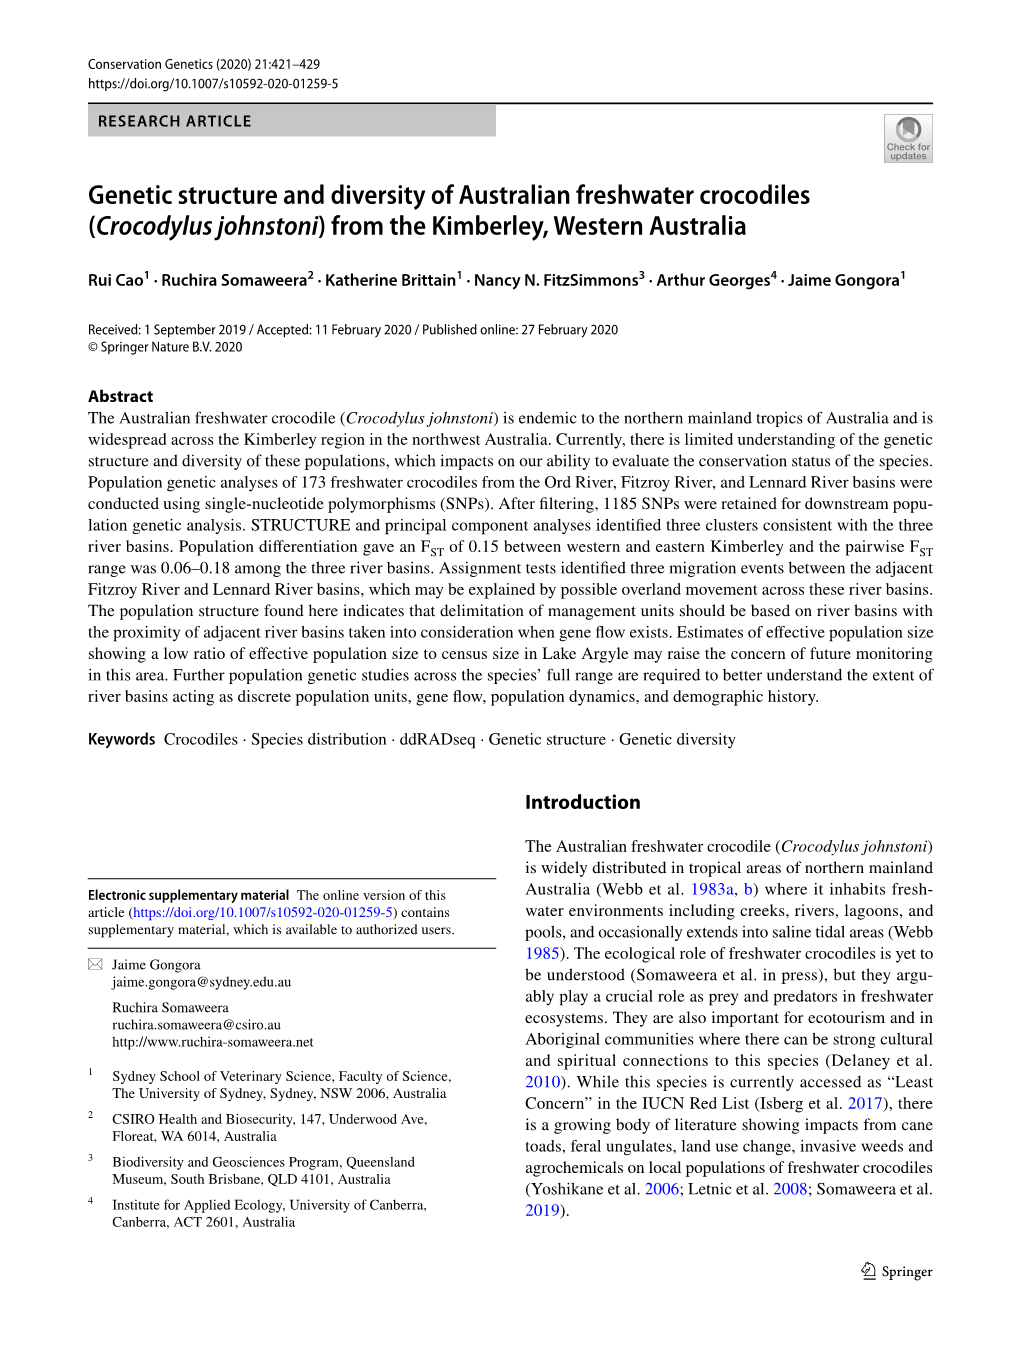 Genetic Structure and Diversity of Australian Freshwater Crocodiles (Crocodylus Johnstoni) from the Kimberley, Western Australia